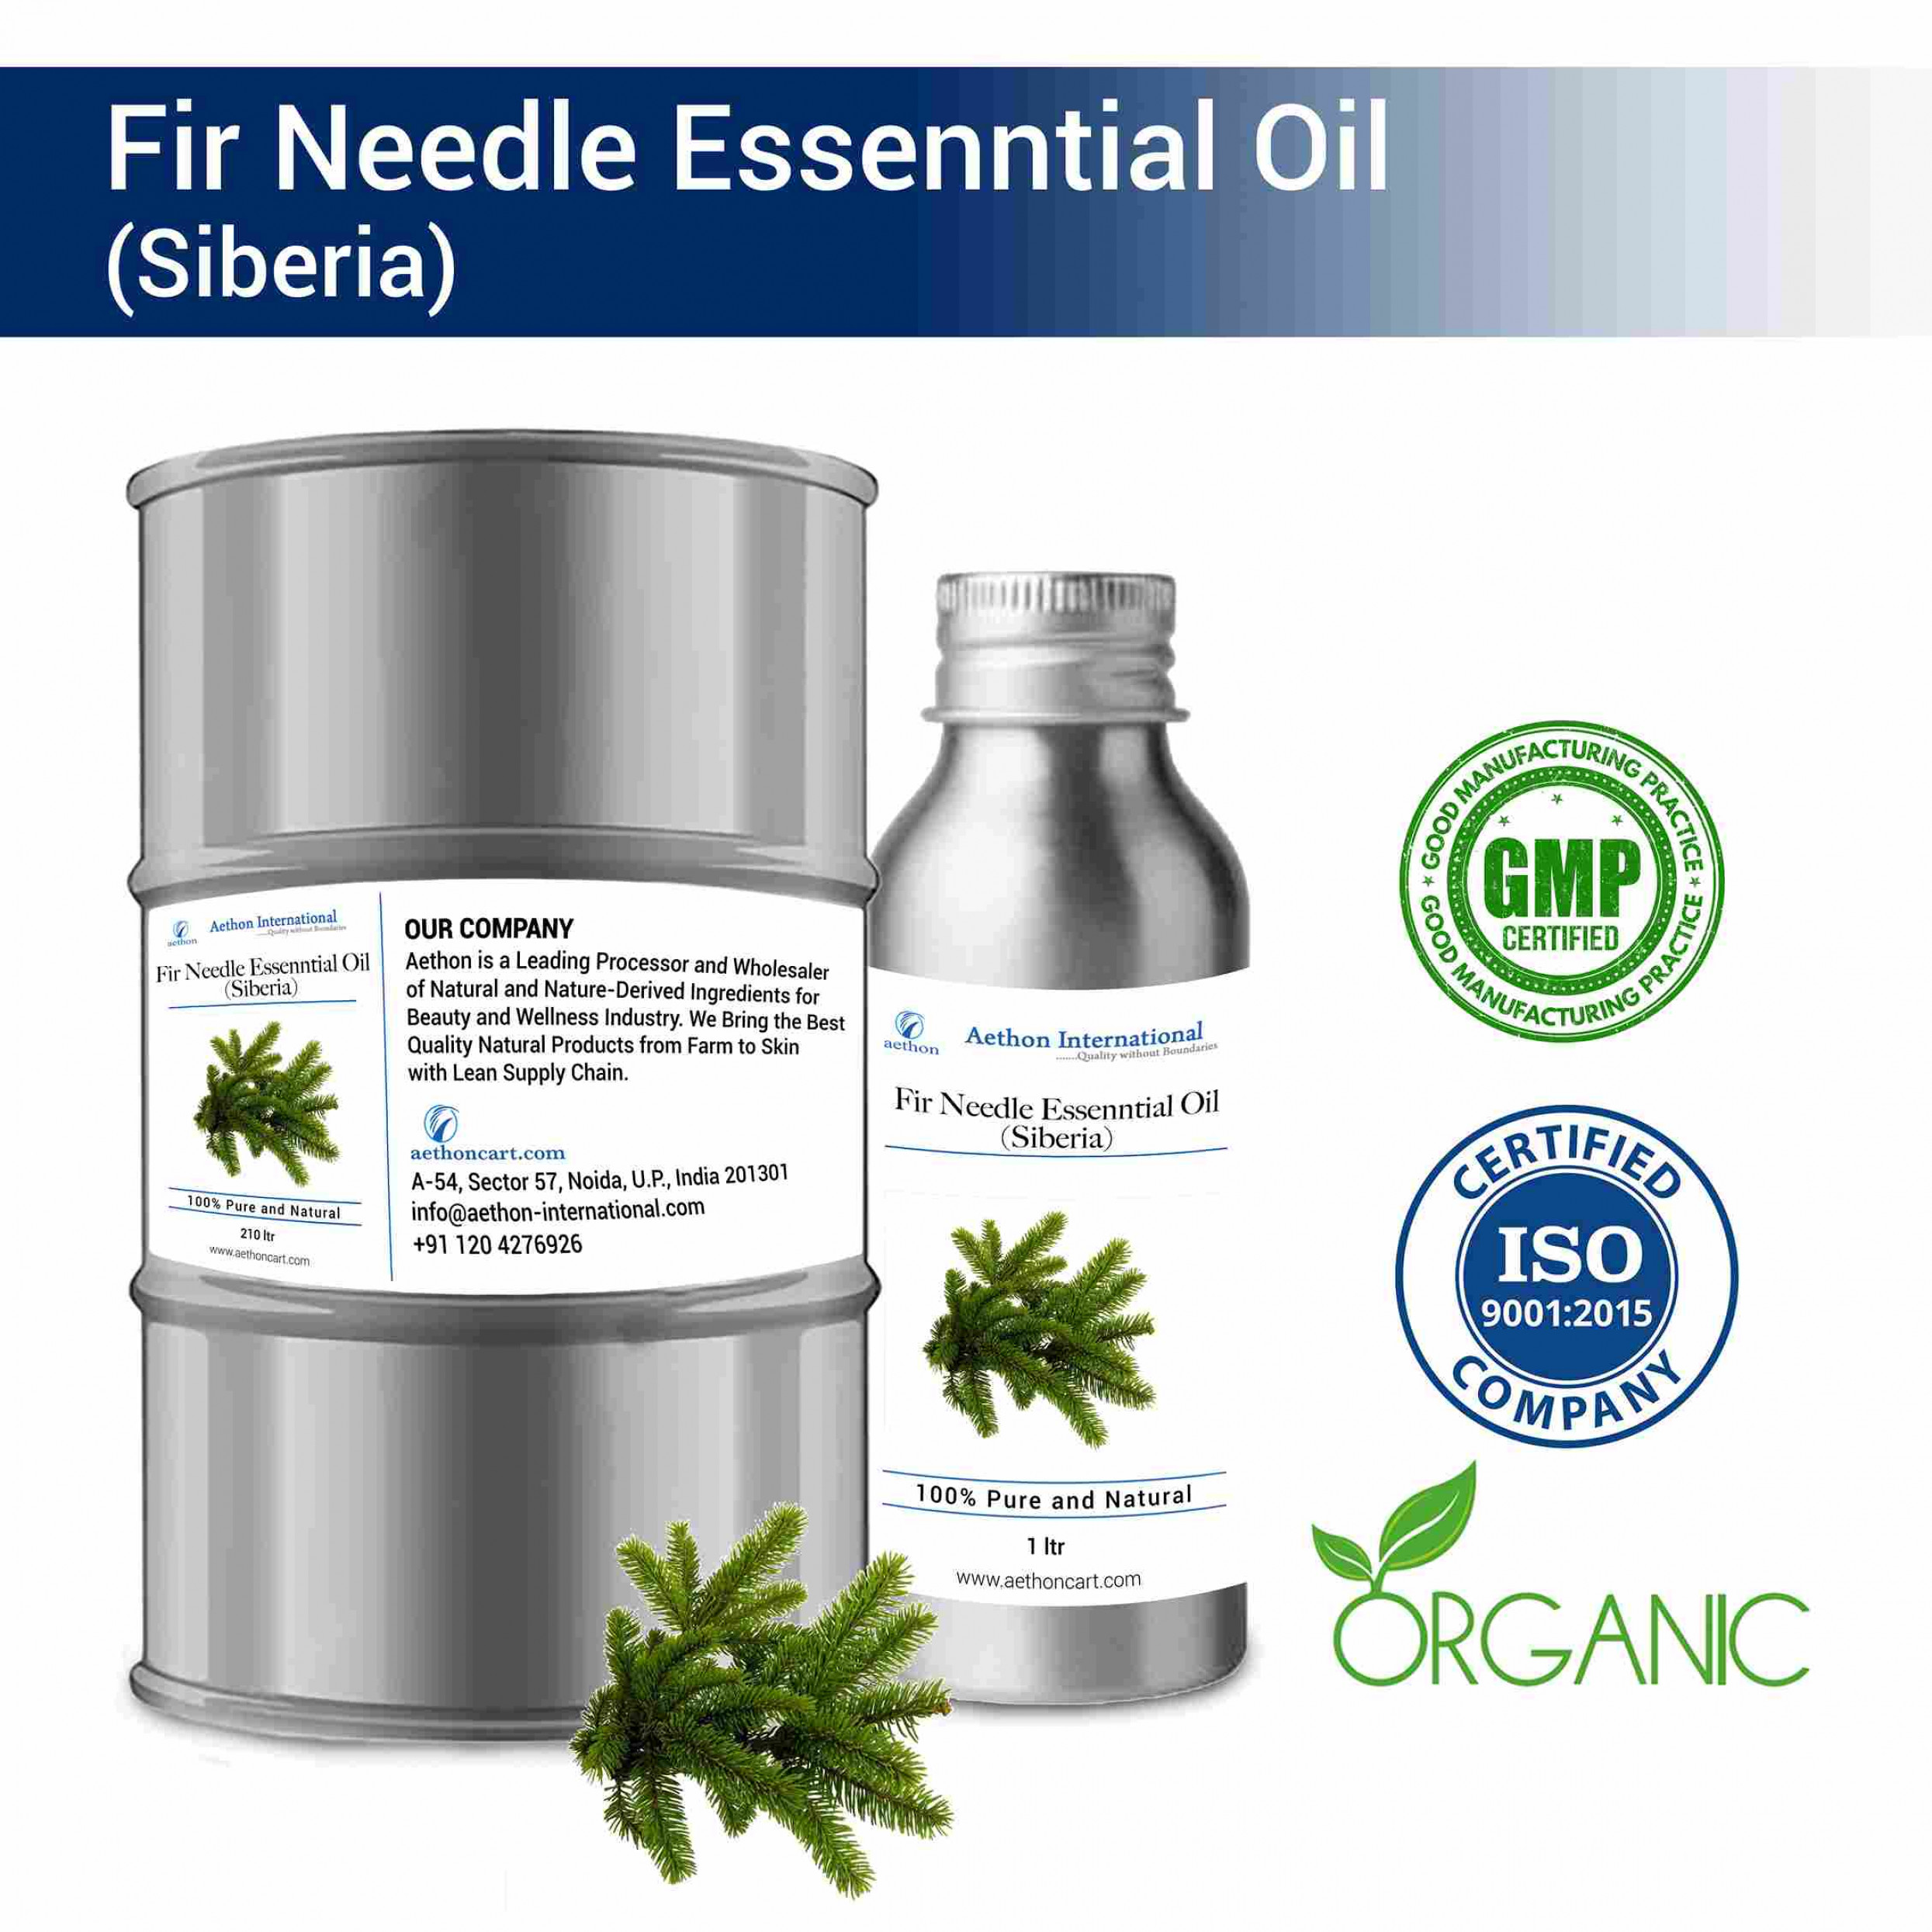 Fir Needle Essenntial Oil (Siberia)